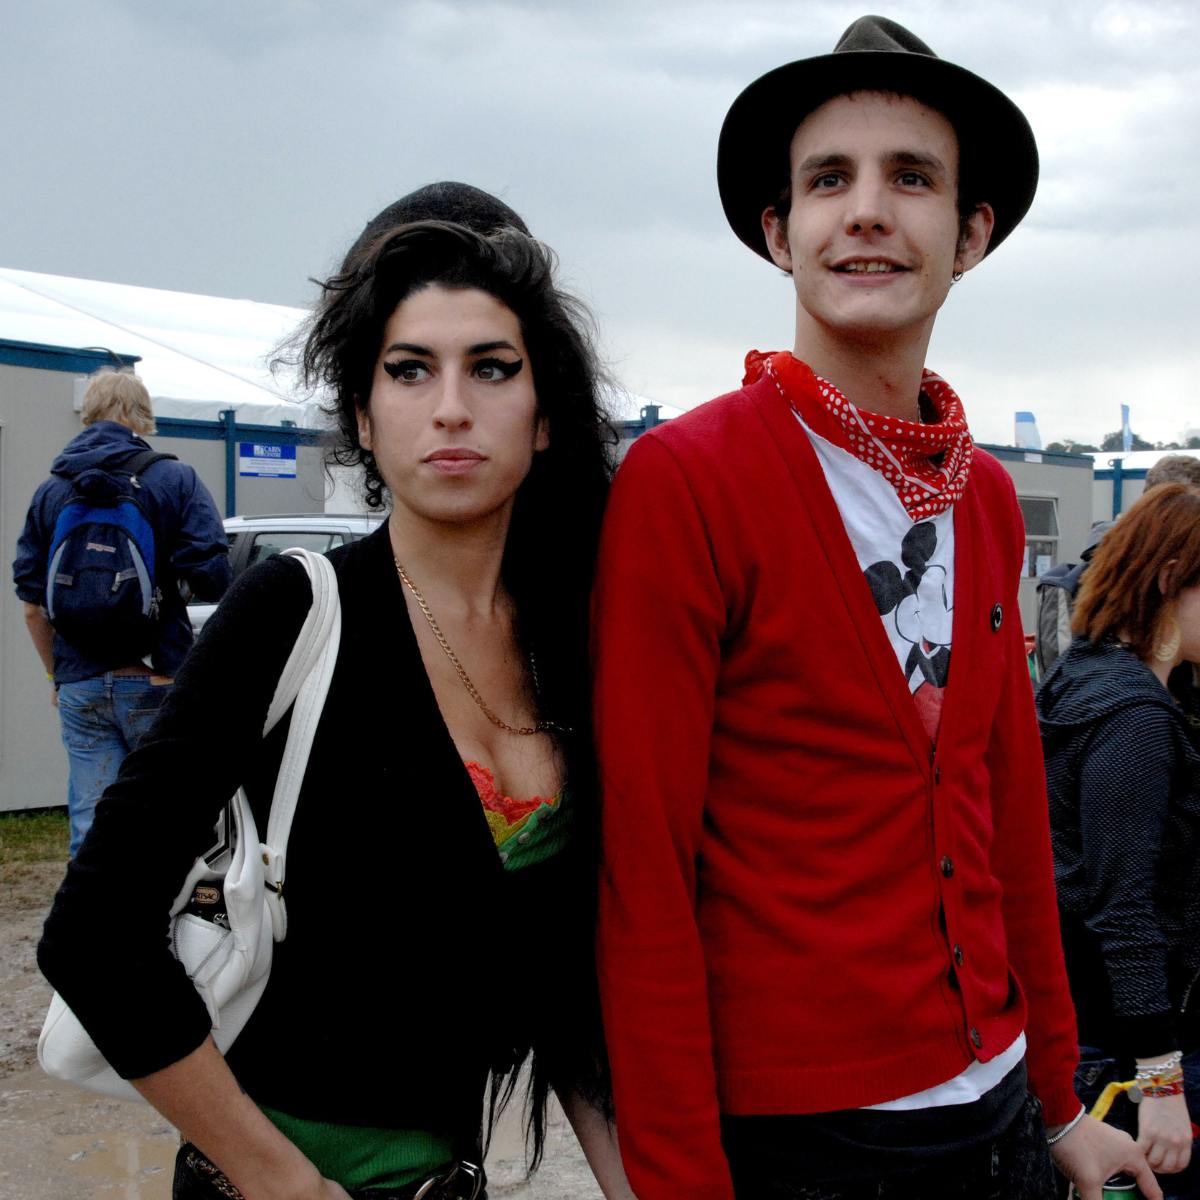 Amy Winehouse (left) and Blake Fielder-Civil, 2007